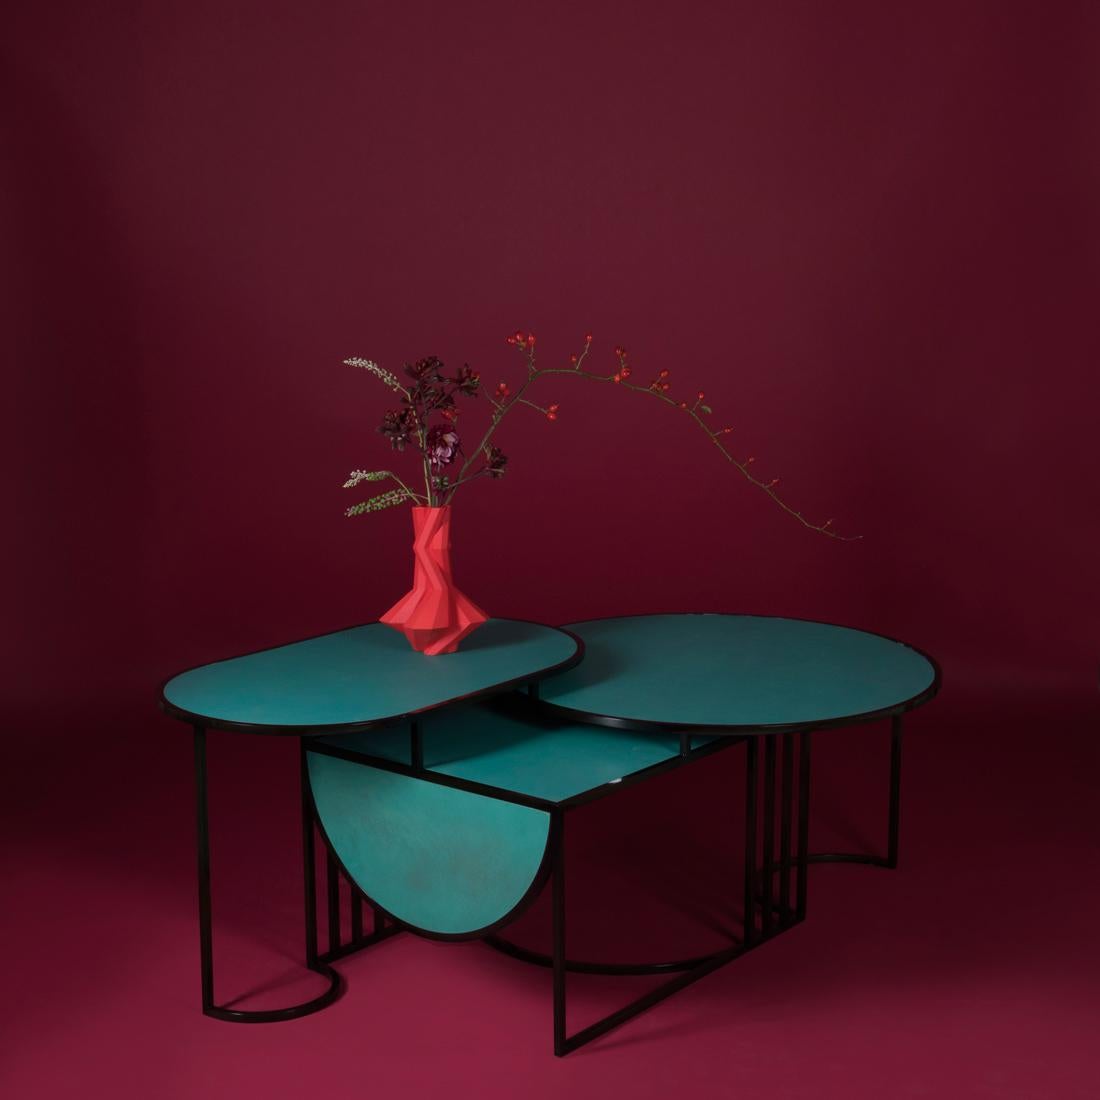 Contemporary Orbit Coffee Table, Steel Frame and Verdigris Copper Top, by Lara Bohinc